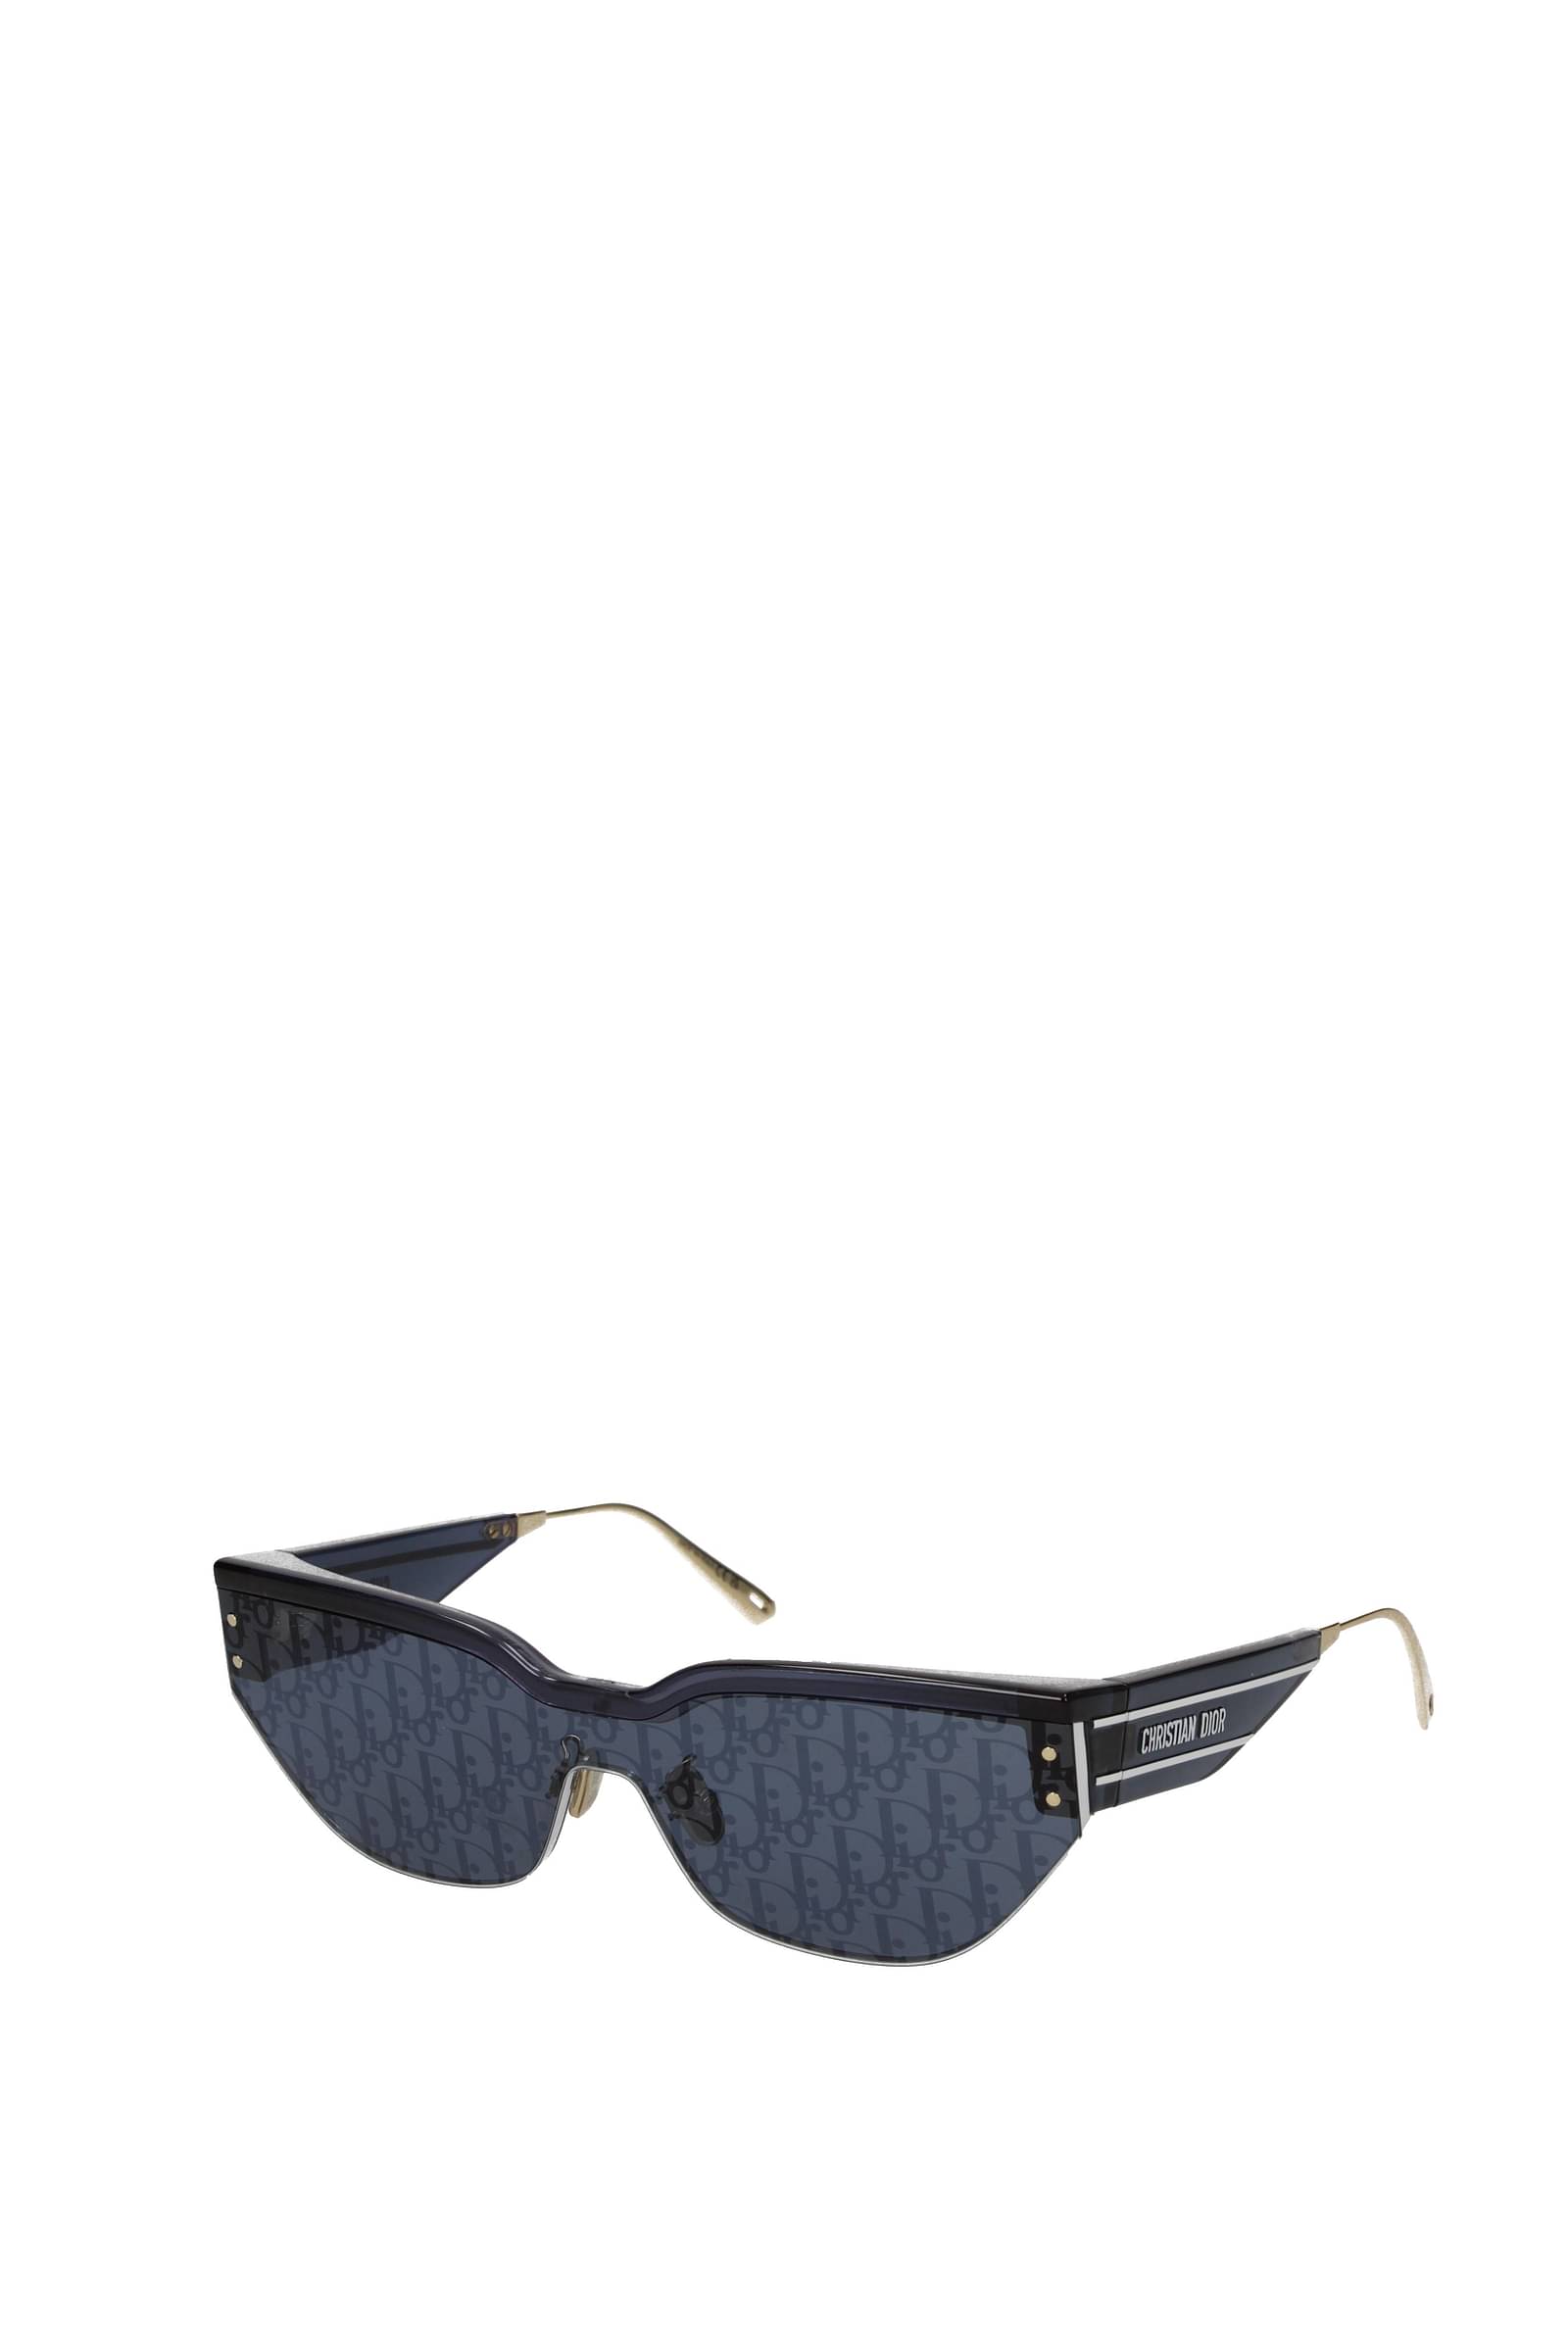 Designer Sunglasses for Women  Aviator Round Square  Cat Eye  DIOR MY